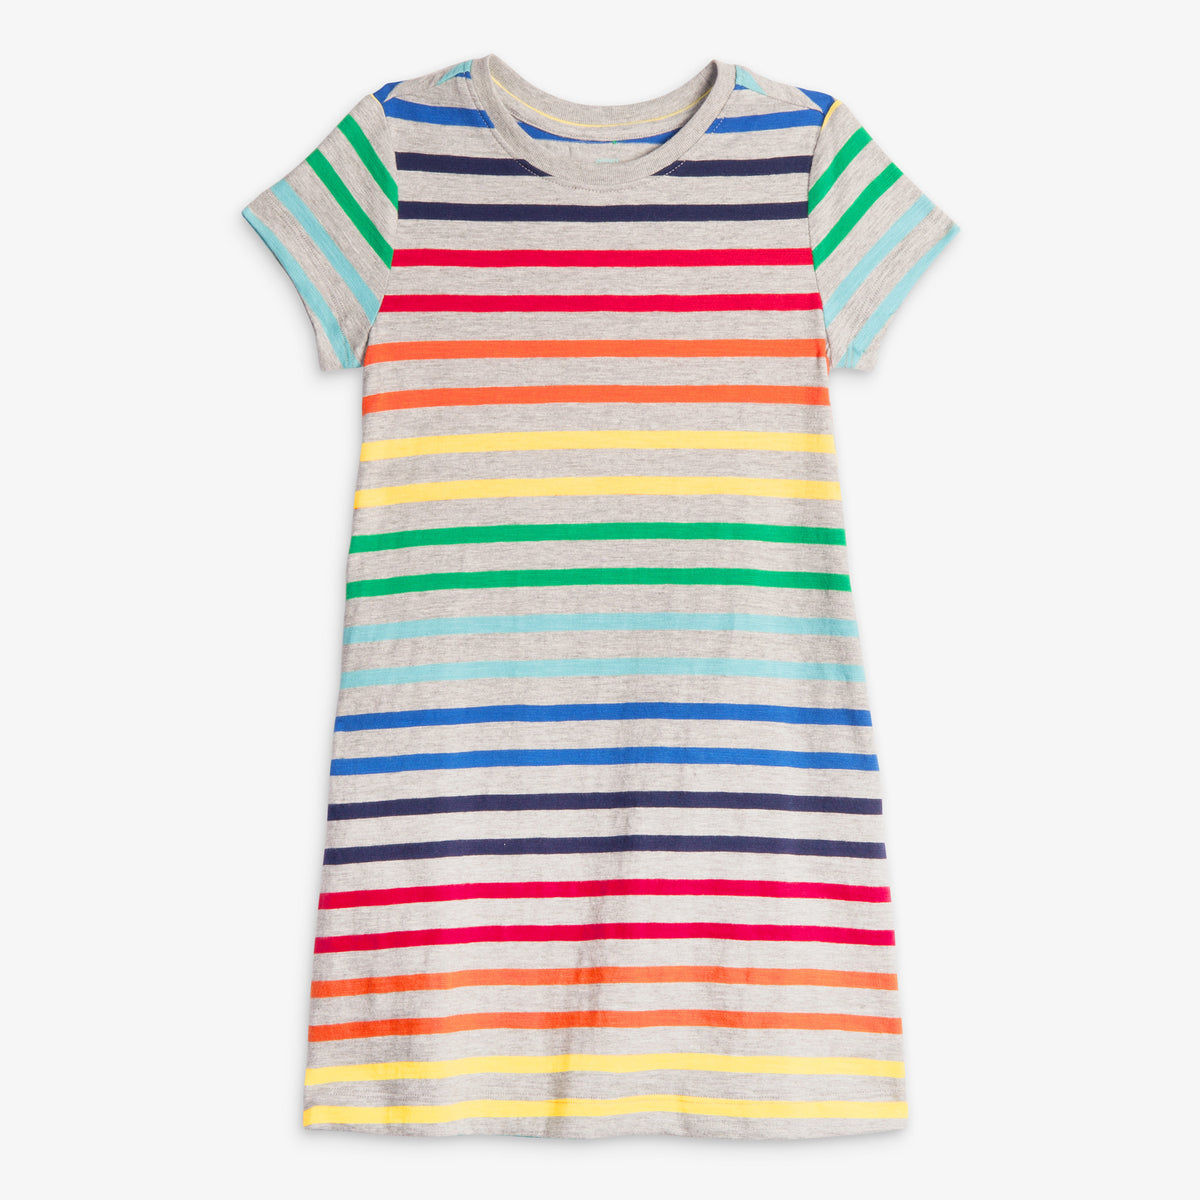 T-shirt dress in rainbow stripe | Primary.com